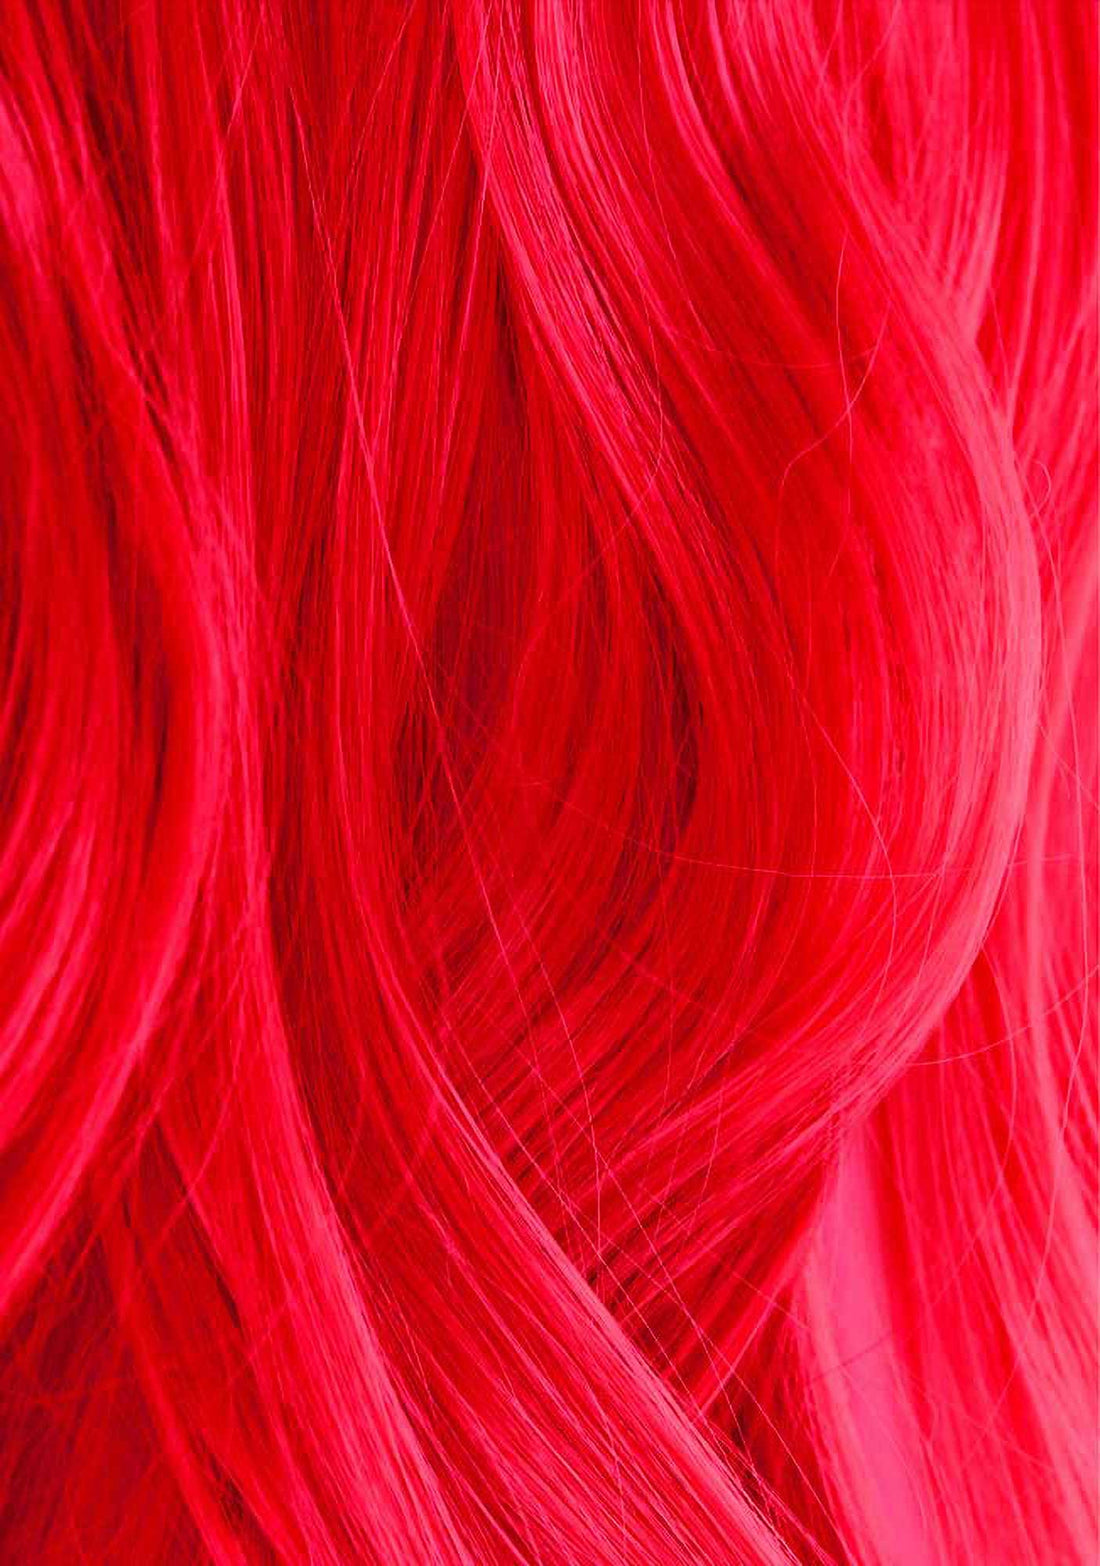 Hair Color - Iroiro 330 UV Reactive Red Neon Vegan Cruelty-Free Semi-Permanent Hair Color